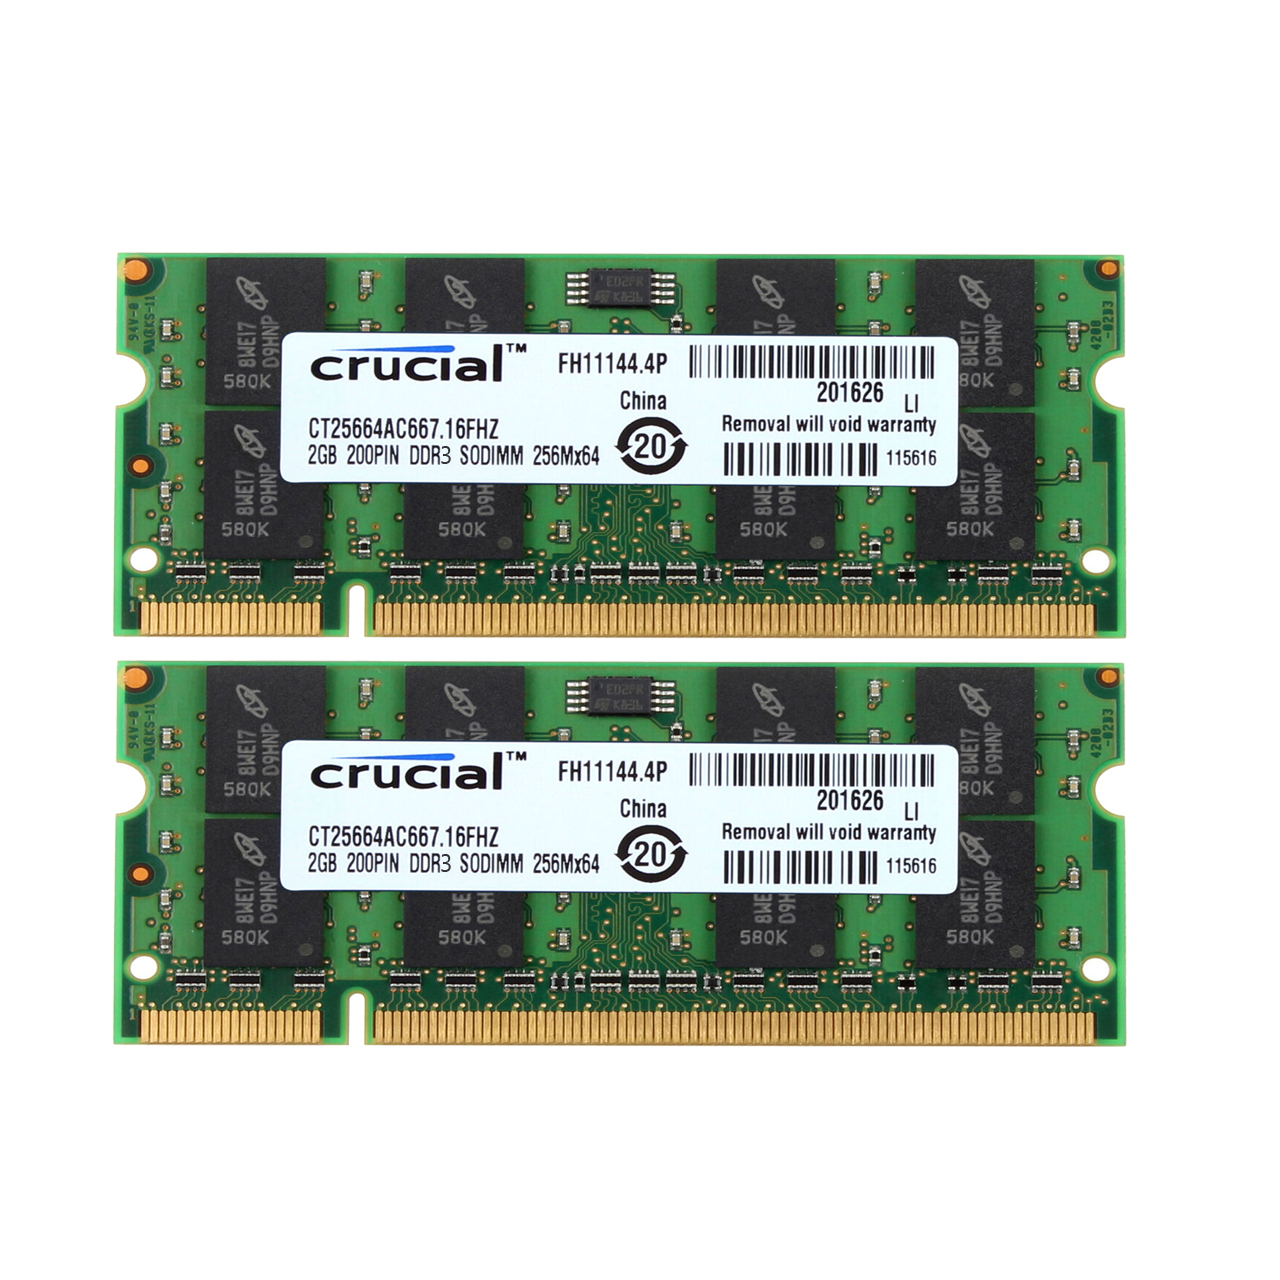 رم لپ تاپ DDR3 دو کاناله 1333 مگاهرتز کروشیال CL11 مدل SODIMM ظرفیت 4 گیگابایت